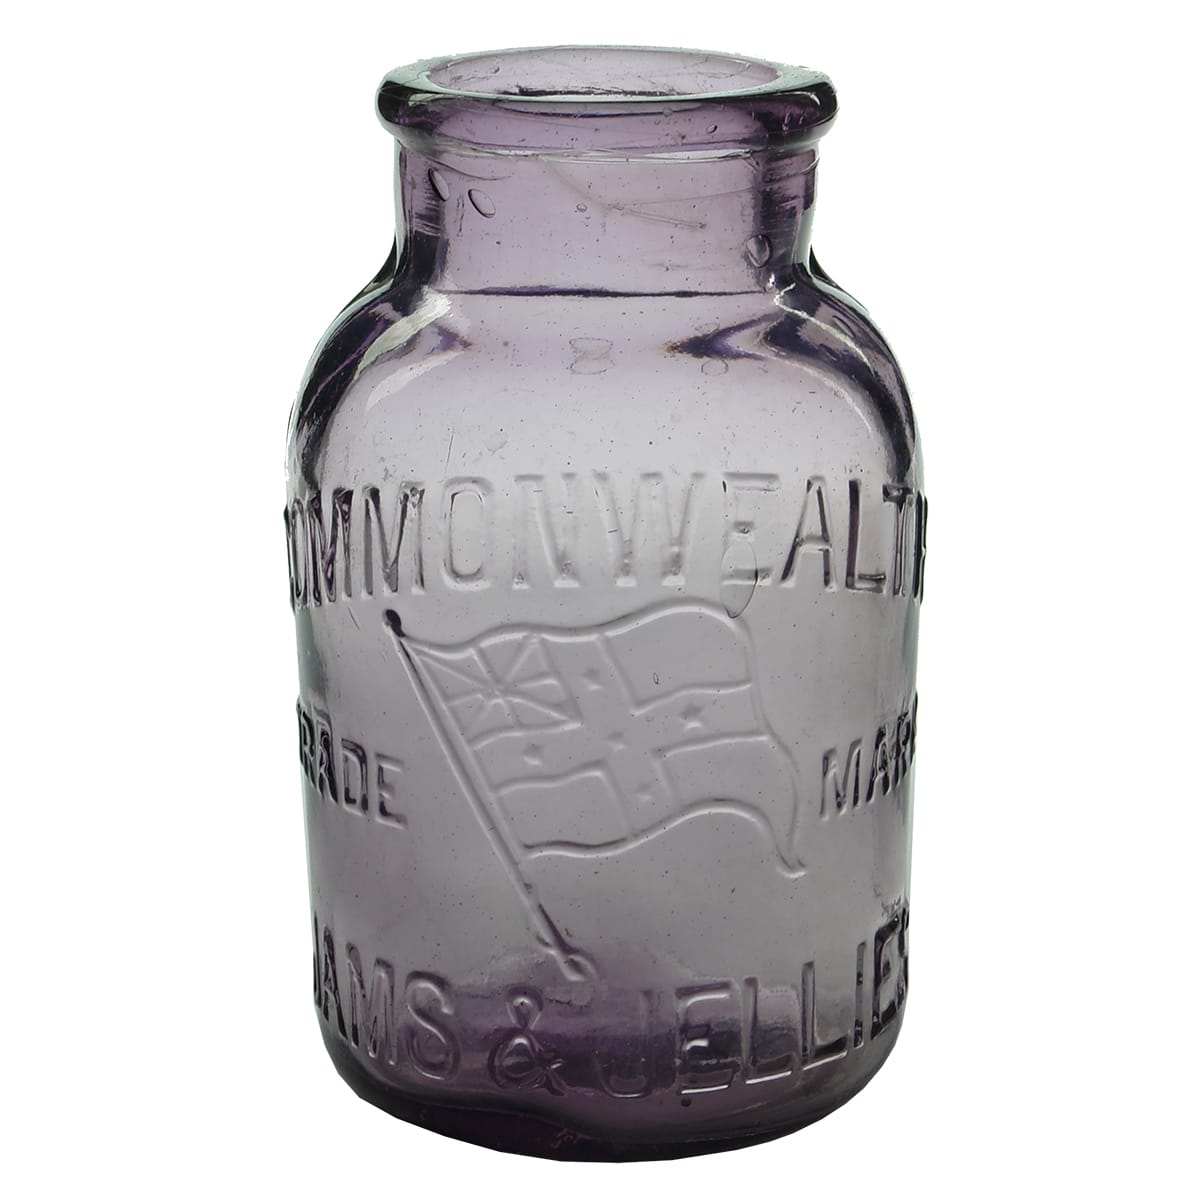 Commonwealth Jams & Jellies Jar, amethyst.